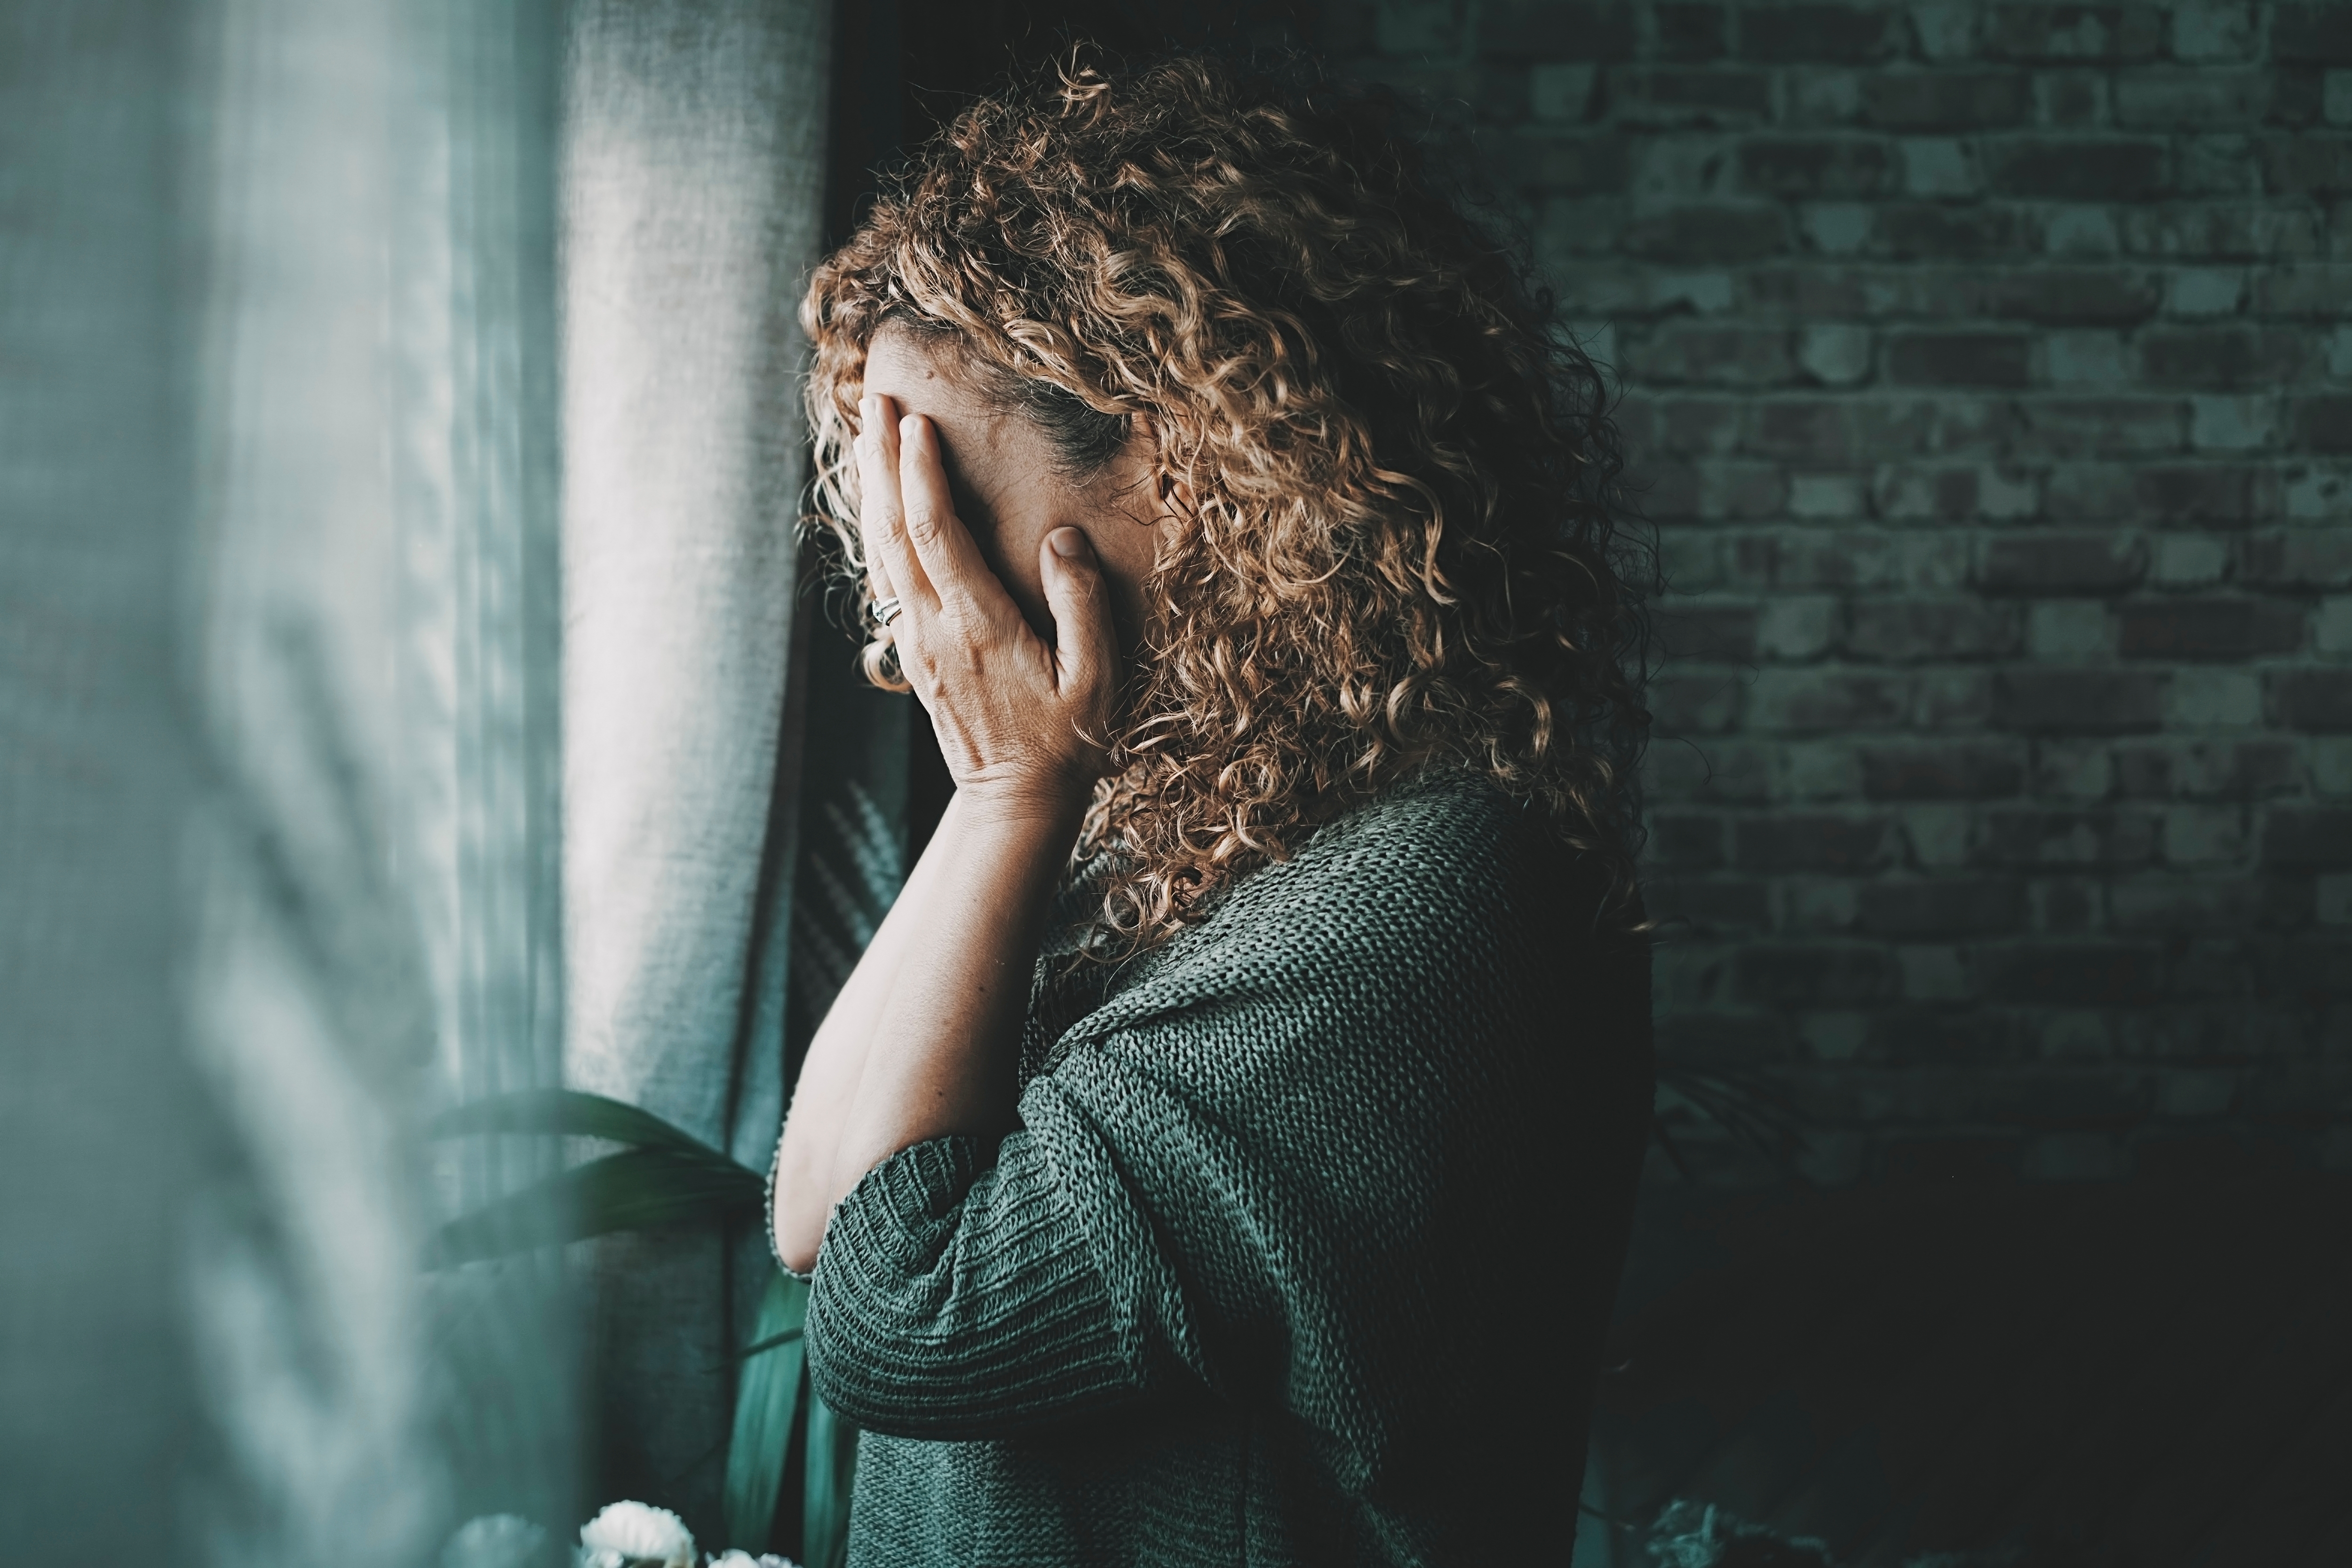 A worried woman | Source: Shutterstock